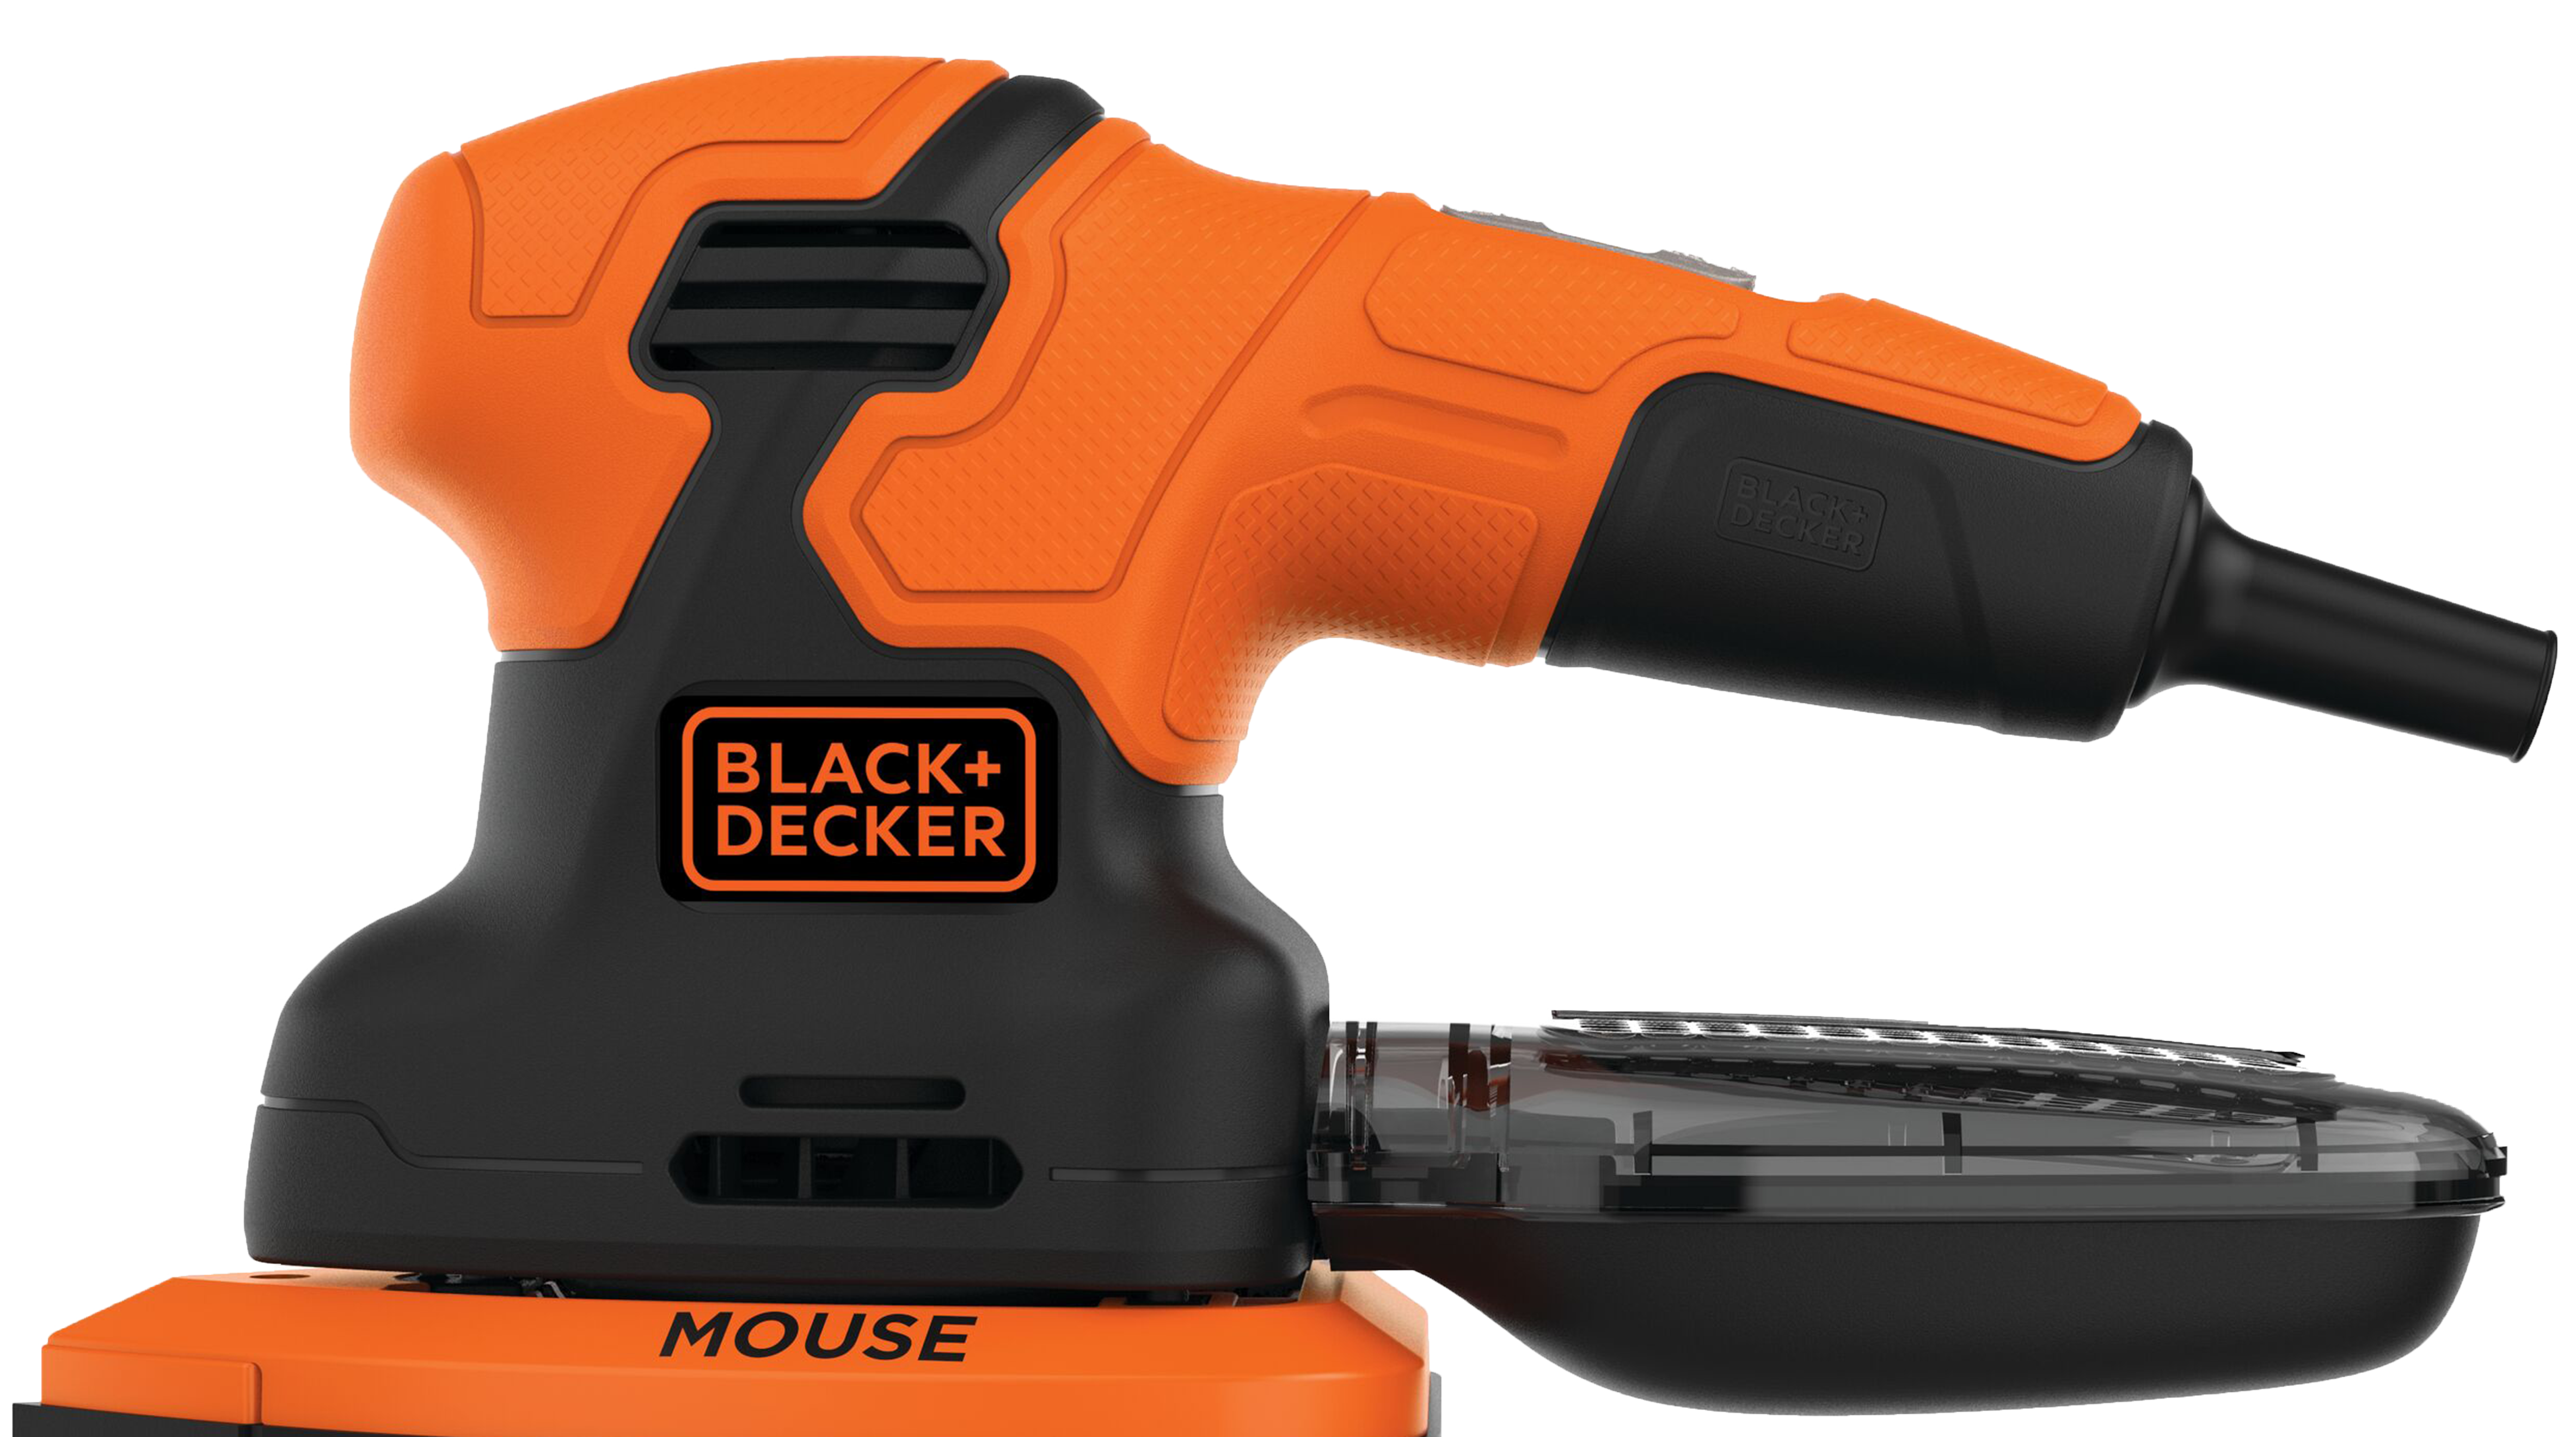 BLACK+DECKER Detail Sander, 1.2 Amp, 16,000 OPM, Compact Design, 3-Position  Grip for Comfort, Includes Dust Collector, Corded (BDEMS600), Black, Pack